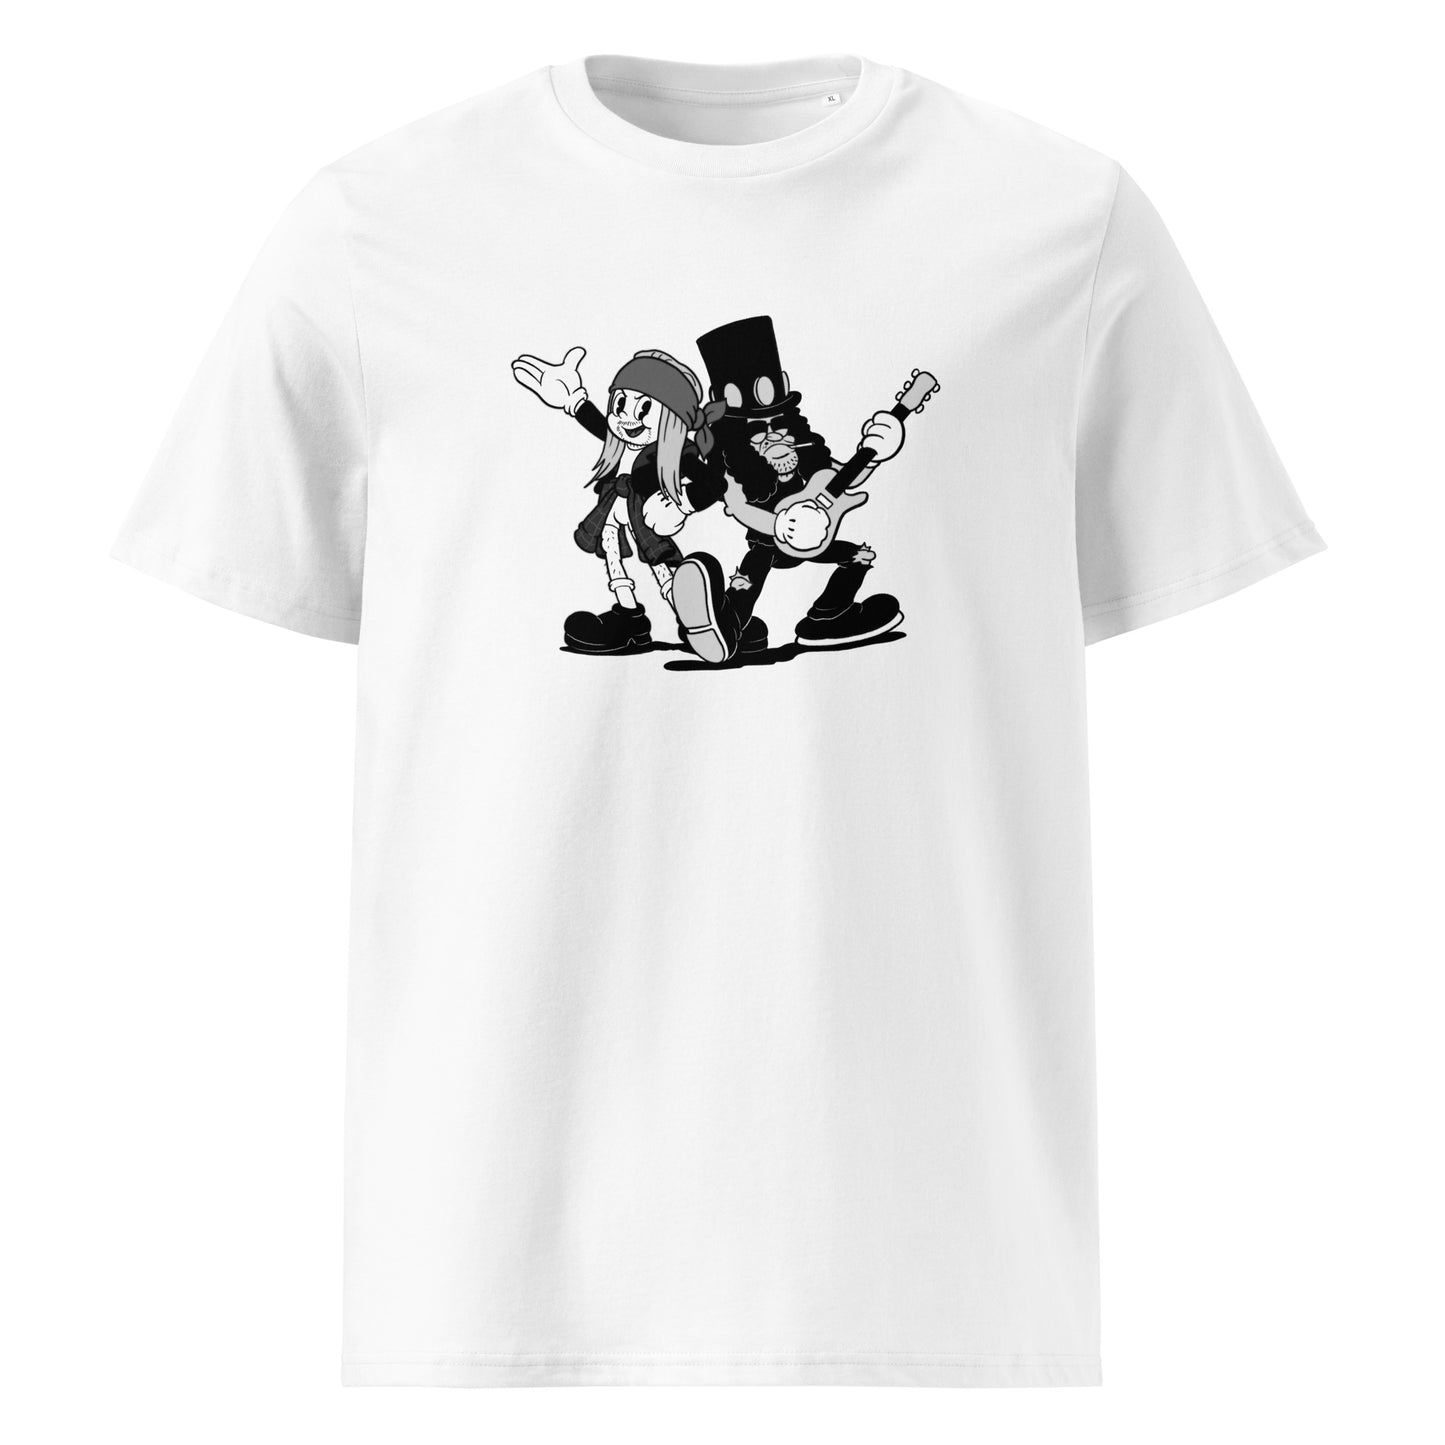 Axel & Slushy in old cartoon style - Unisex organic cotton t-shirt